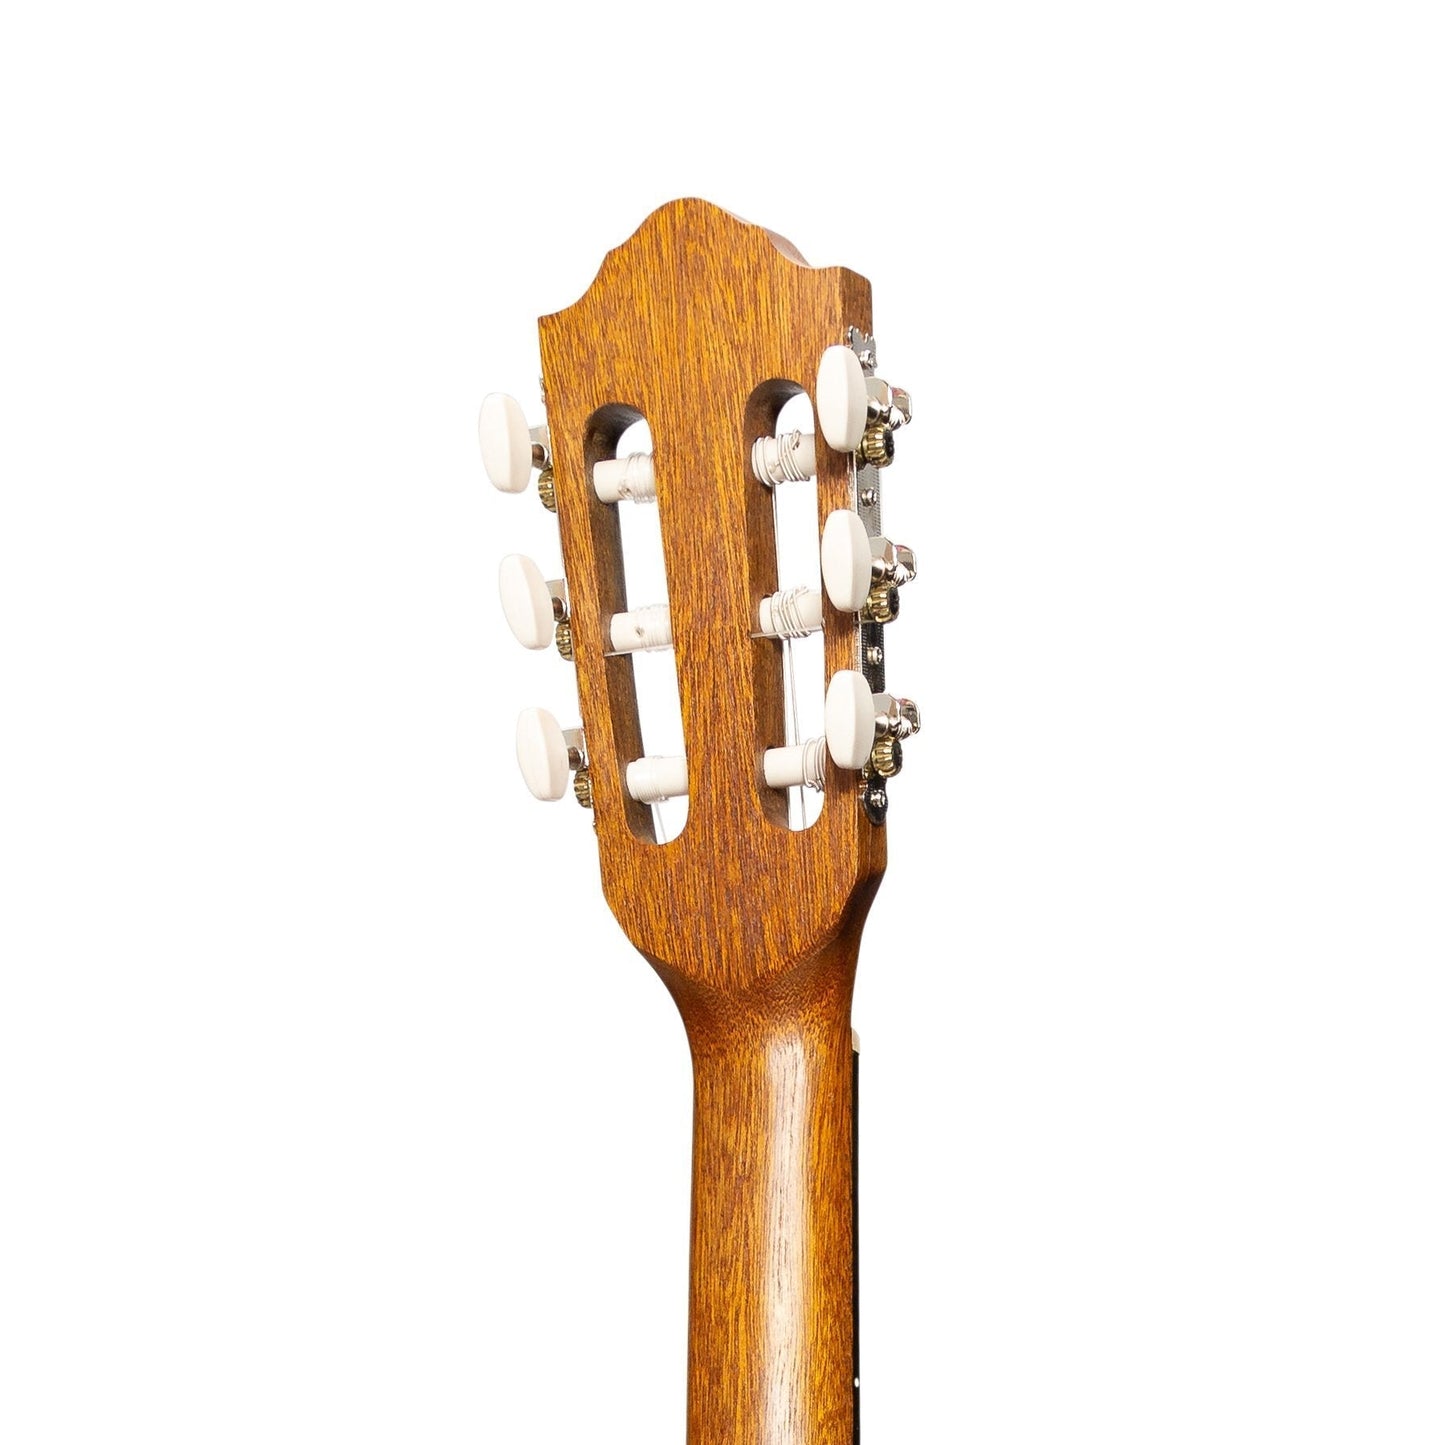 Martinez 'Slim Jim' Full Size Electric Classical Guitar with Pickup/Tuner (Koa)